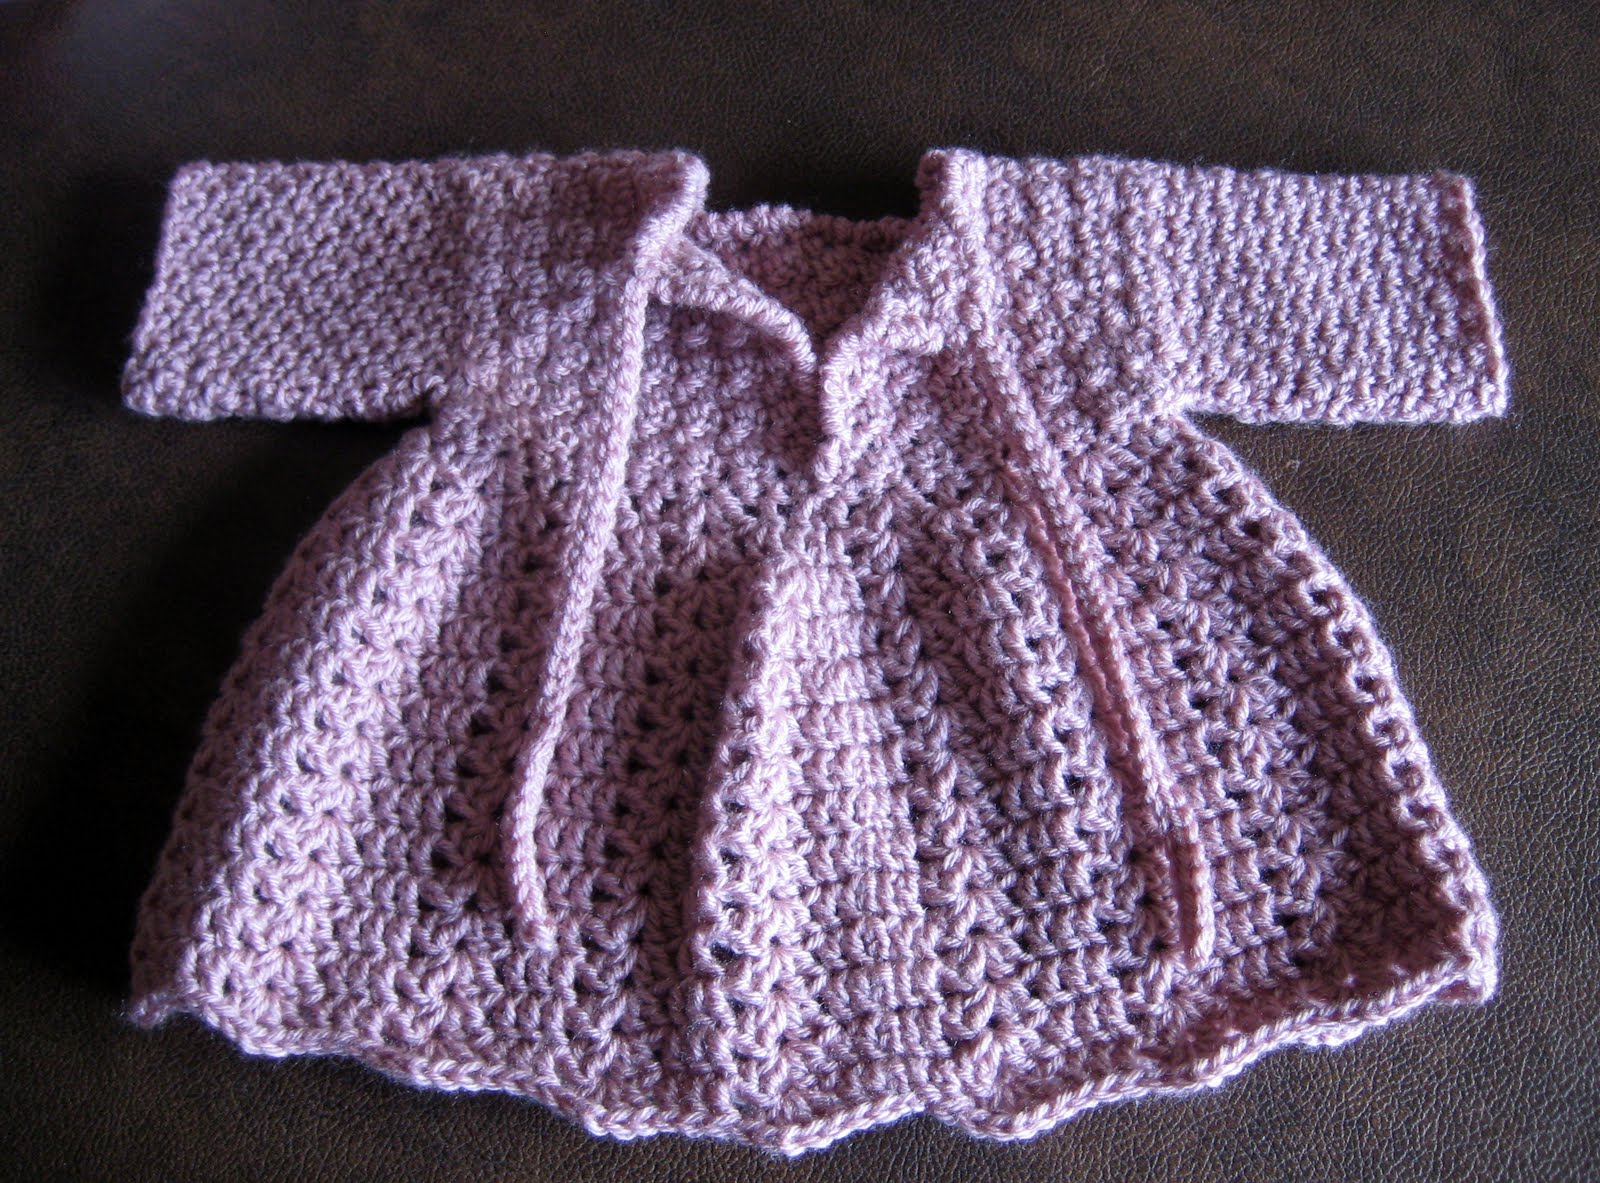 http://www.lomets.com/wp-content/uploads/2013/11/Crochet-Baby-Winter-Dress.jpg